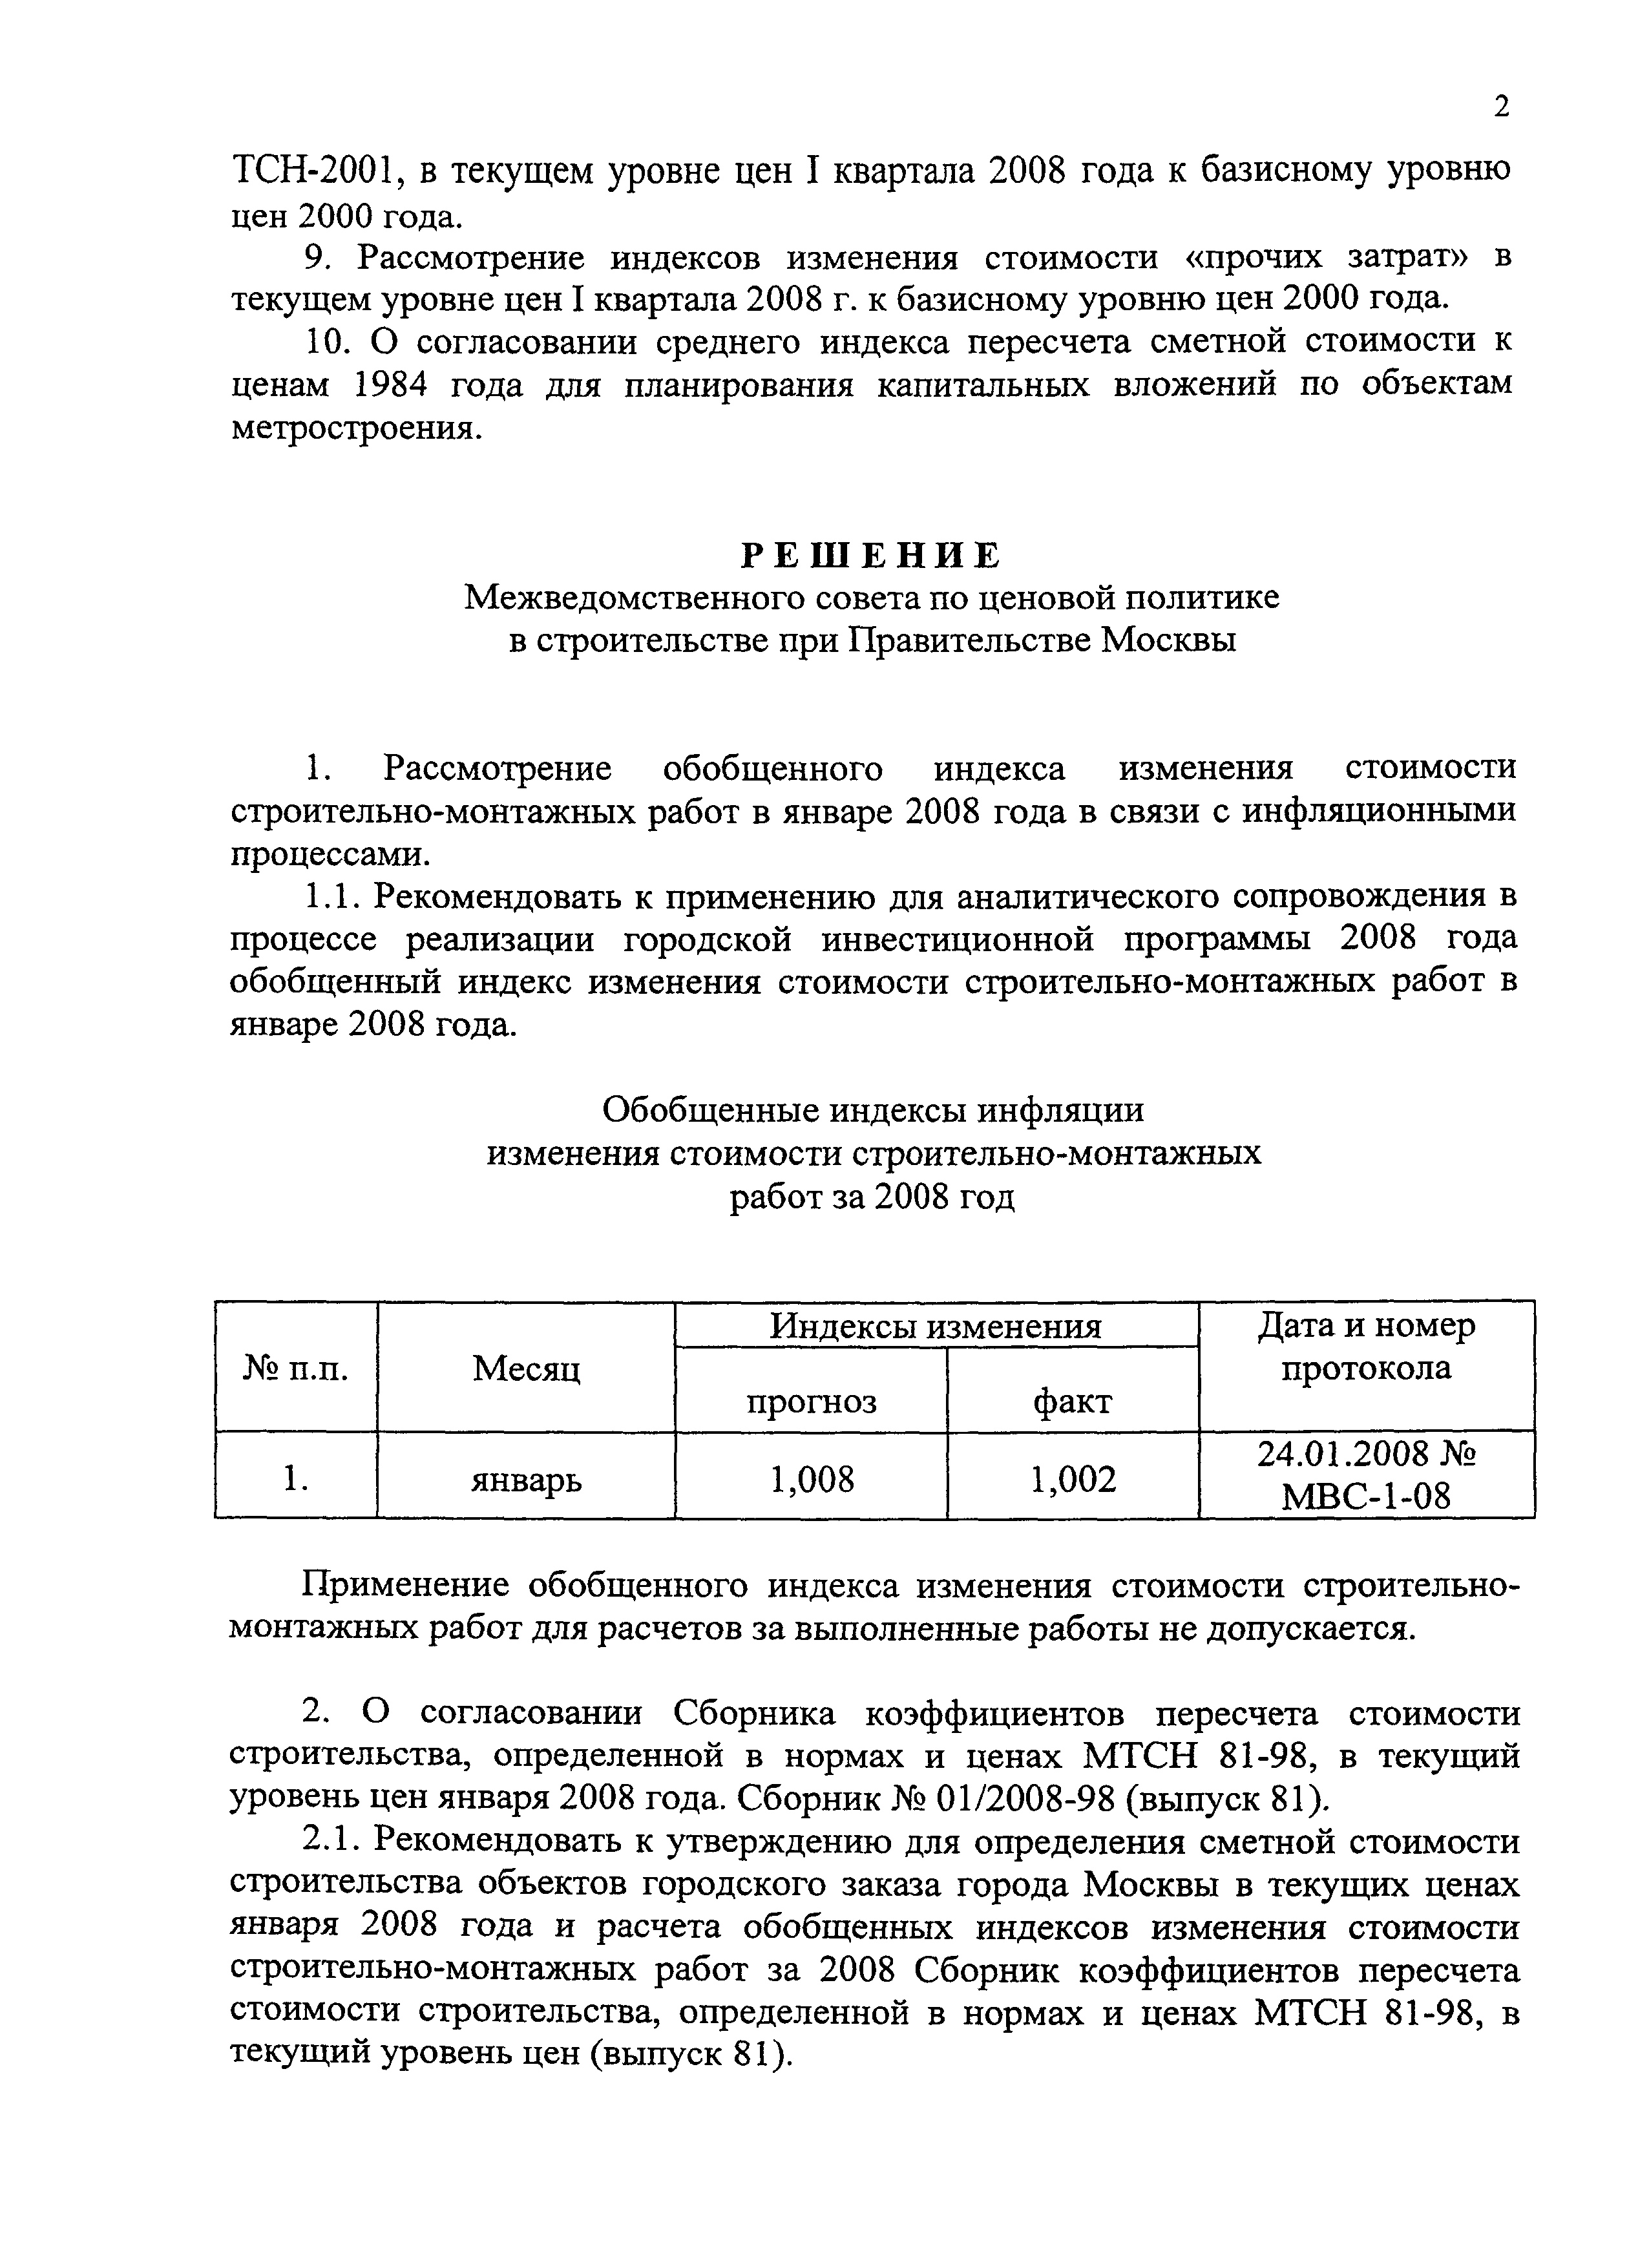 Протокол МВС-1-08